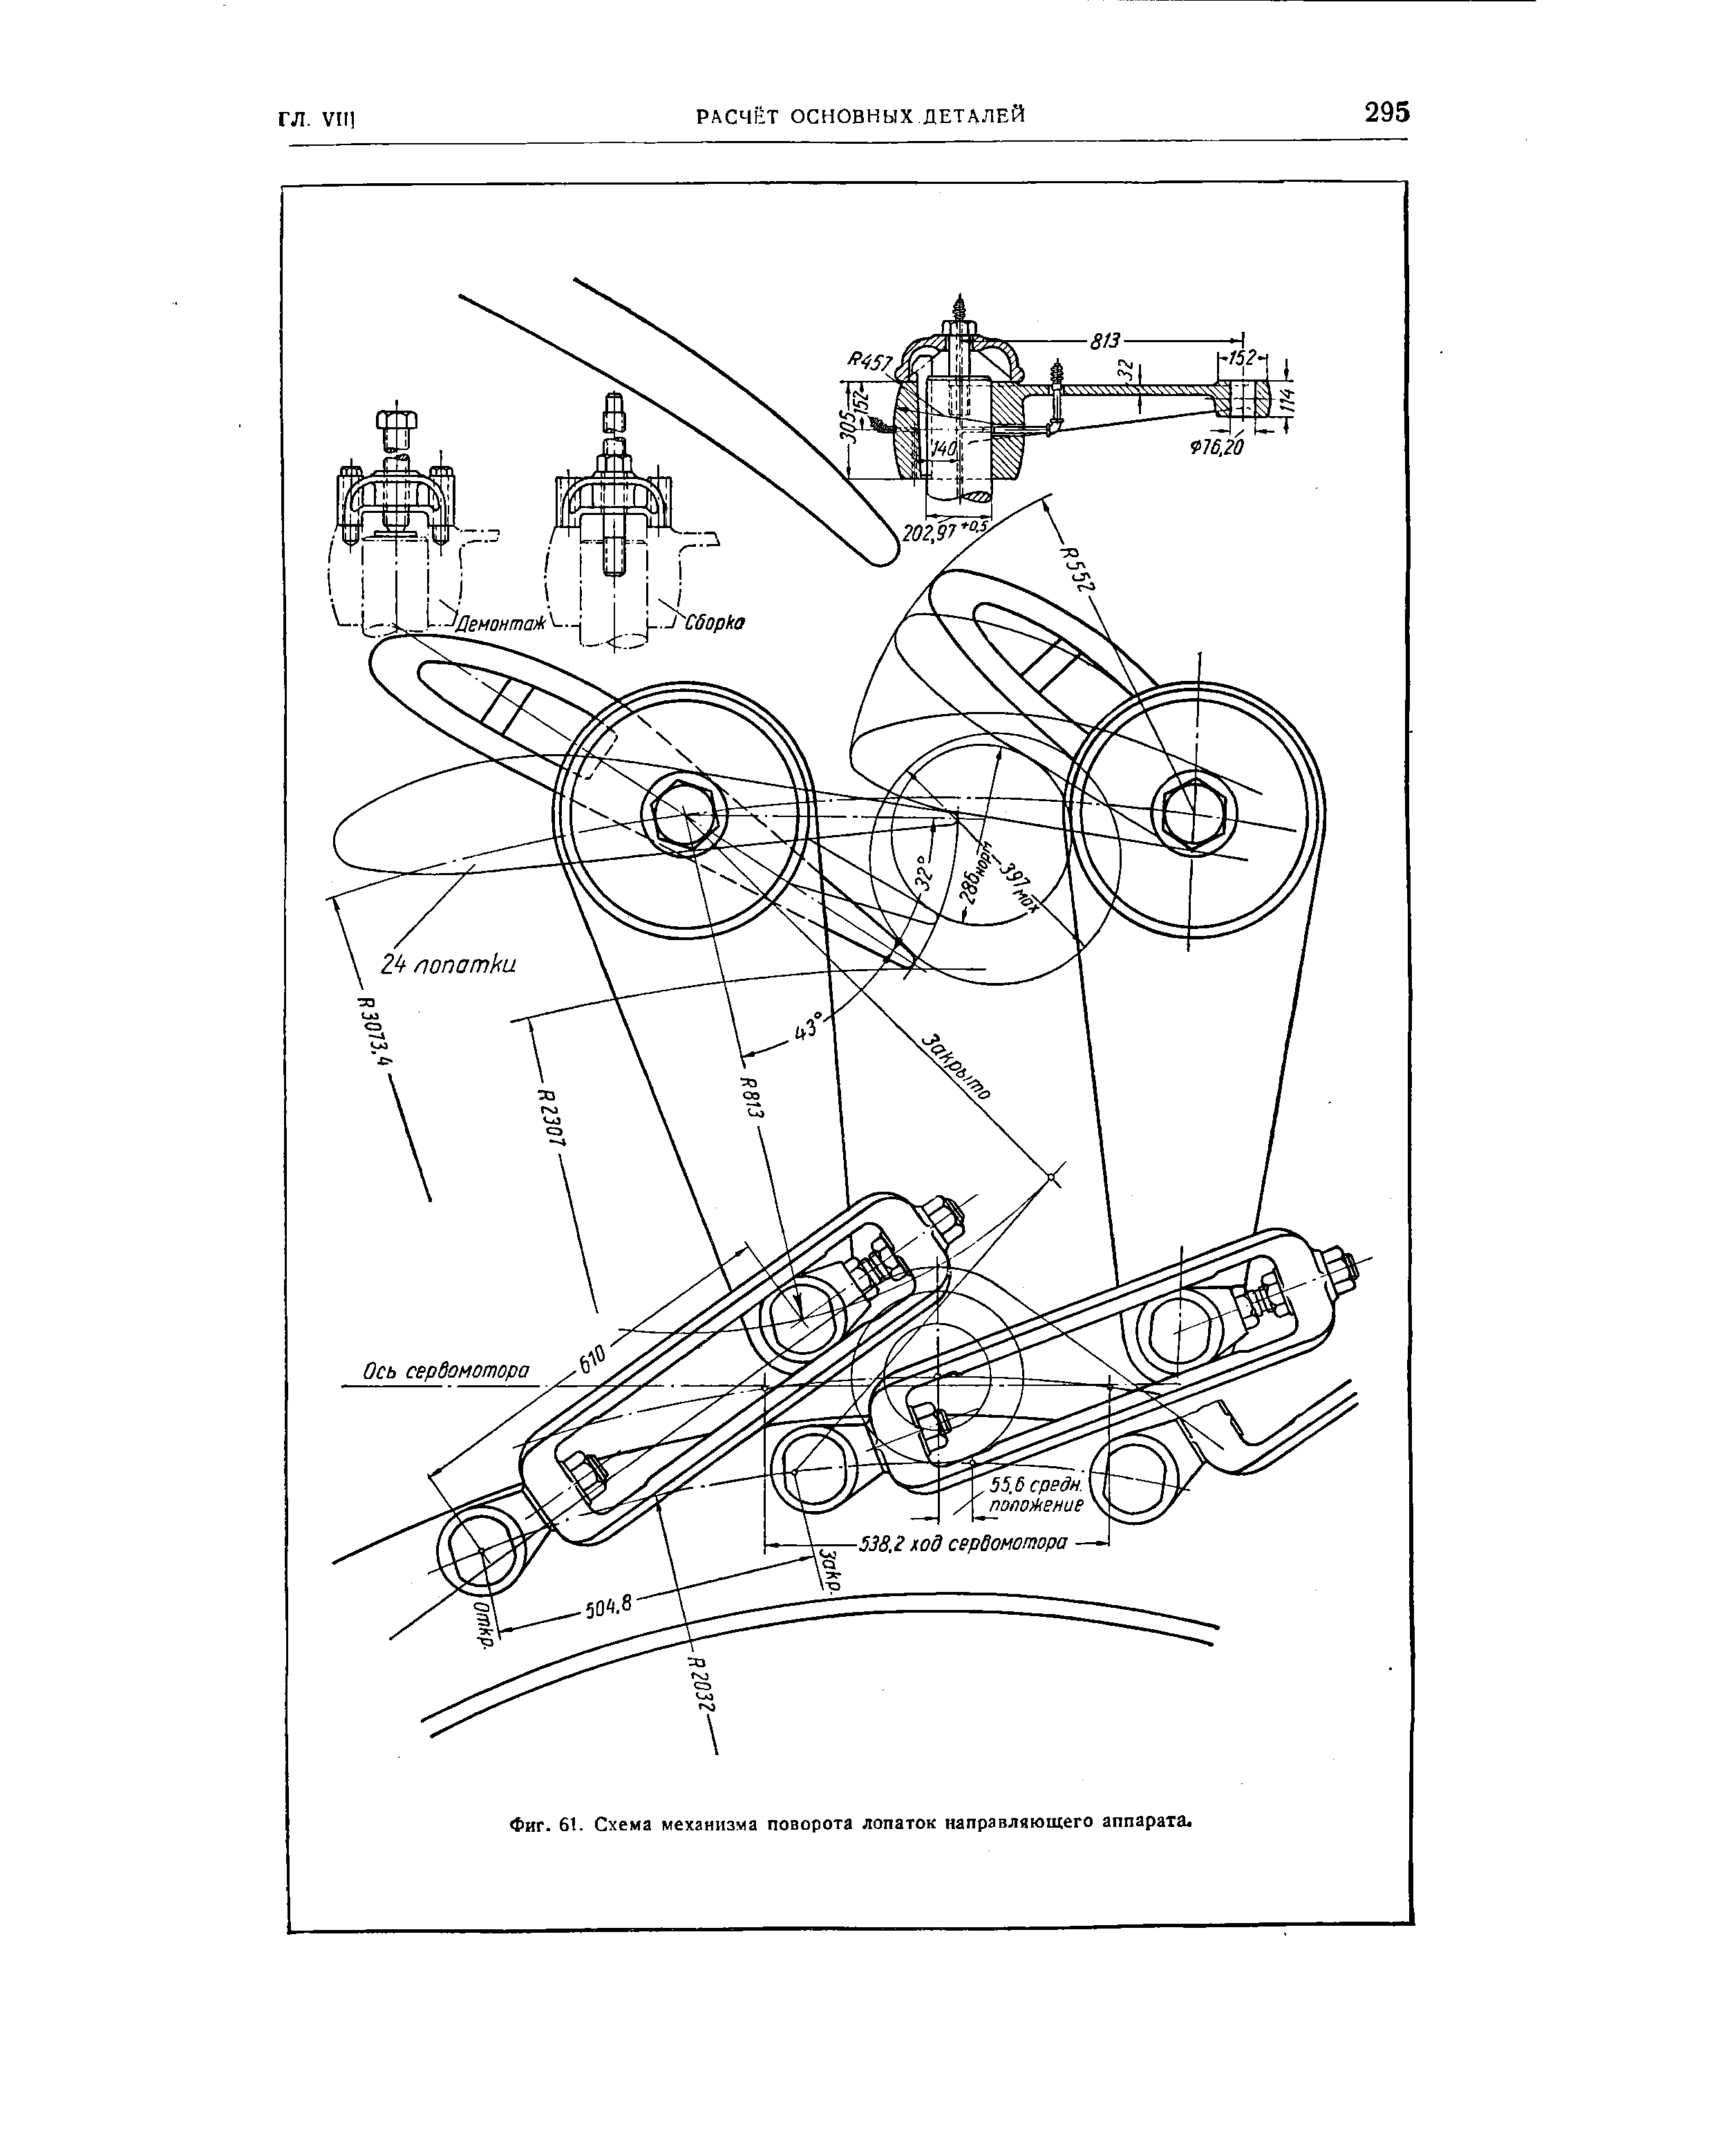 Фиг. 61. Схема механизма поворота лопаток направляющего аппарата.
